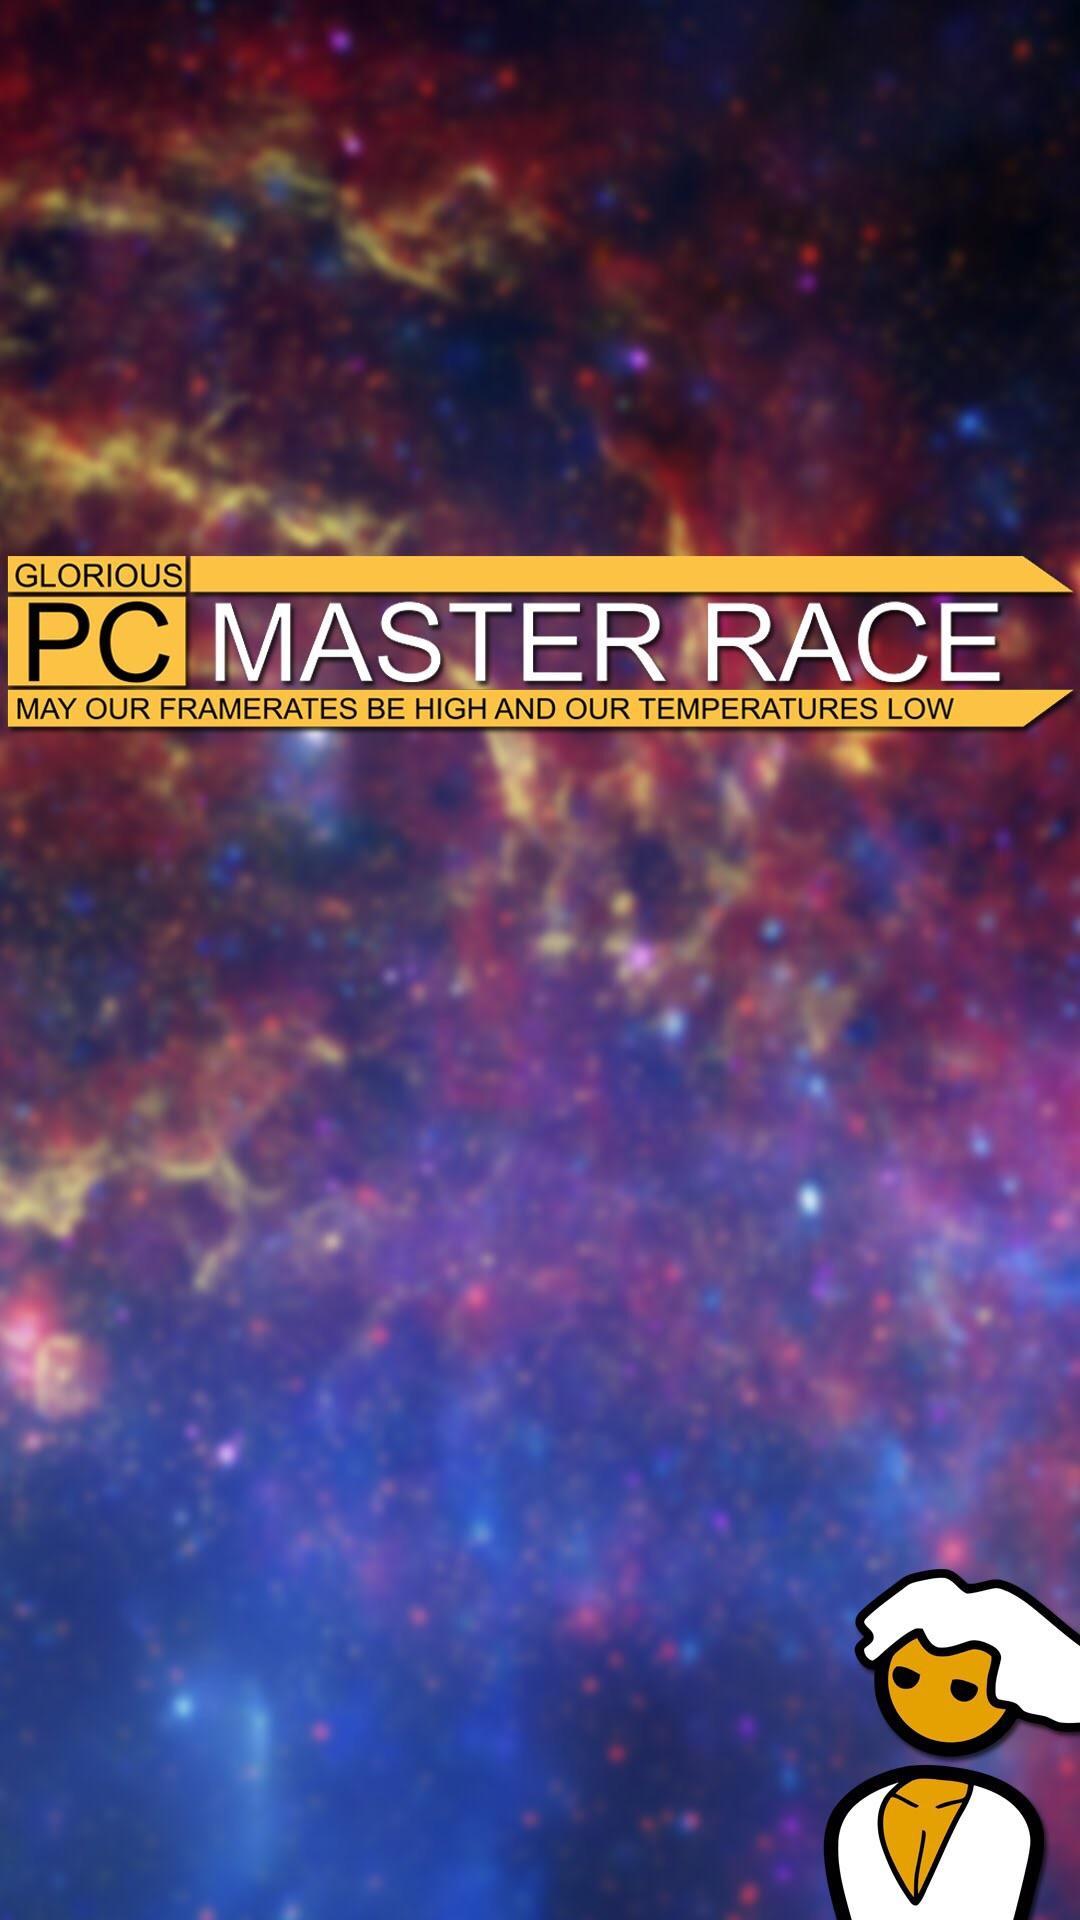 pc master race iphone wallpaper